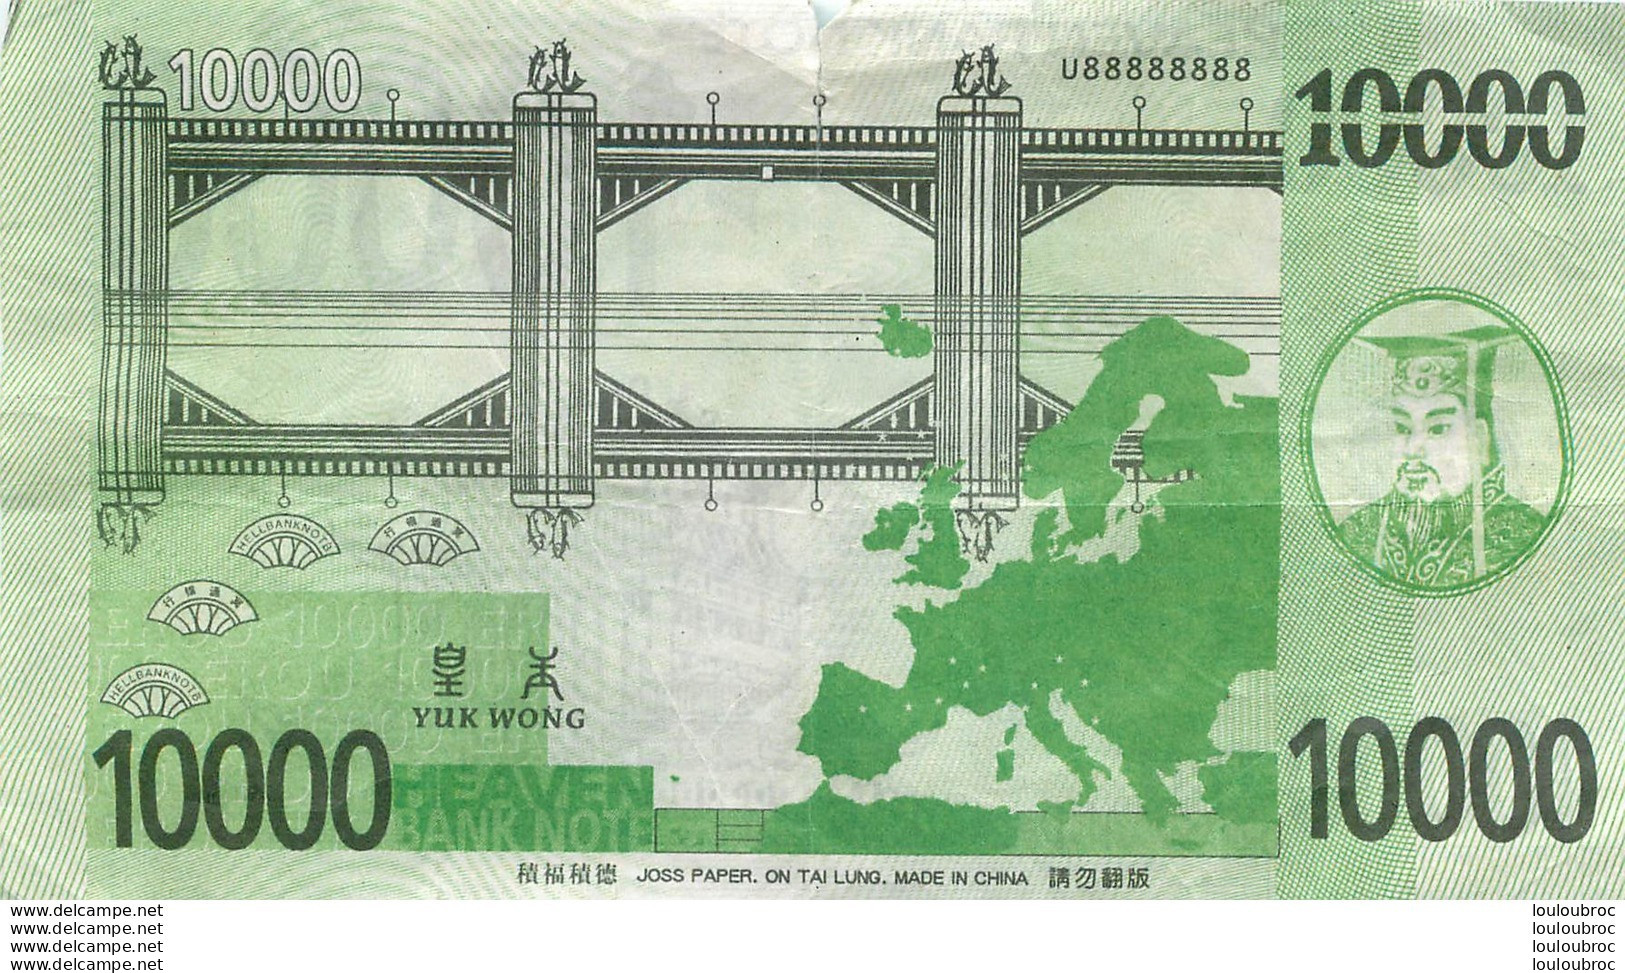 BILLET  10000 YUK WONG  HEAVEN BANK NOTE - Chine